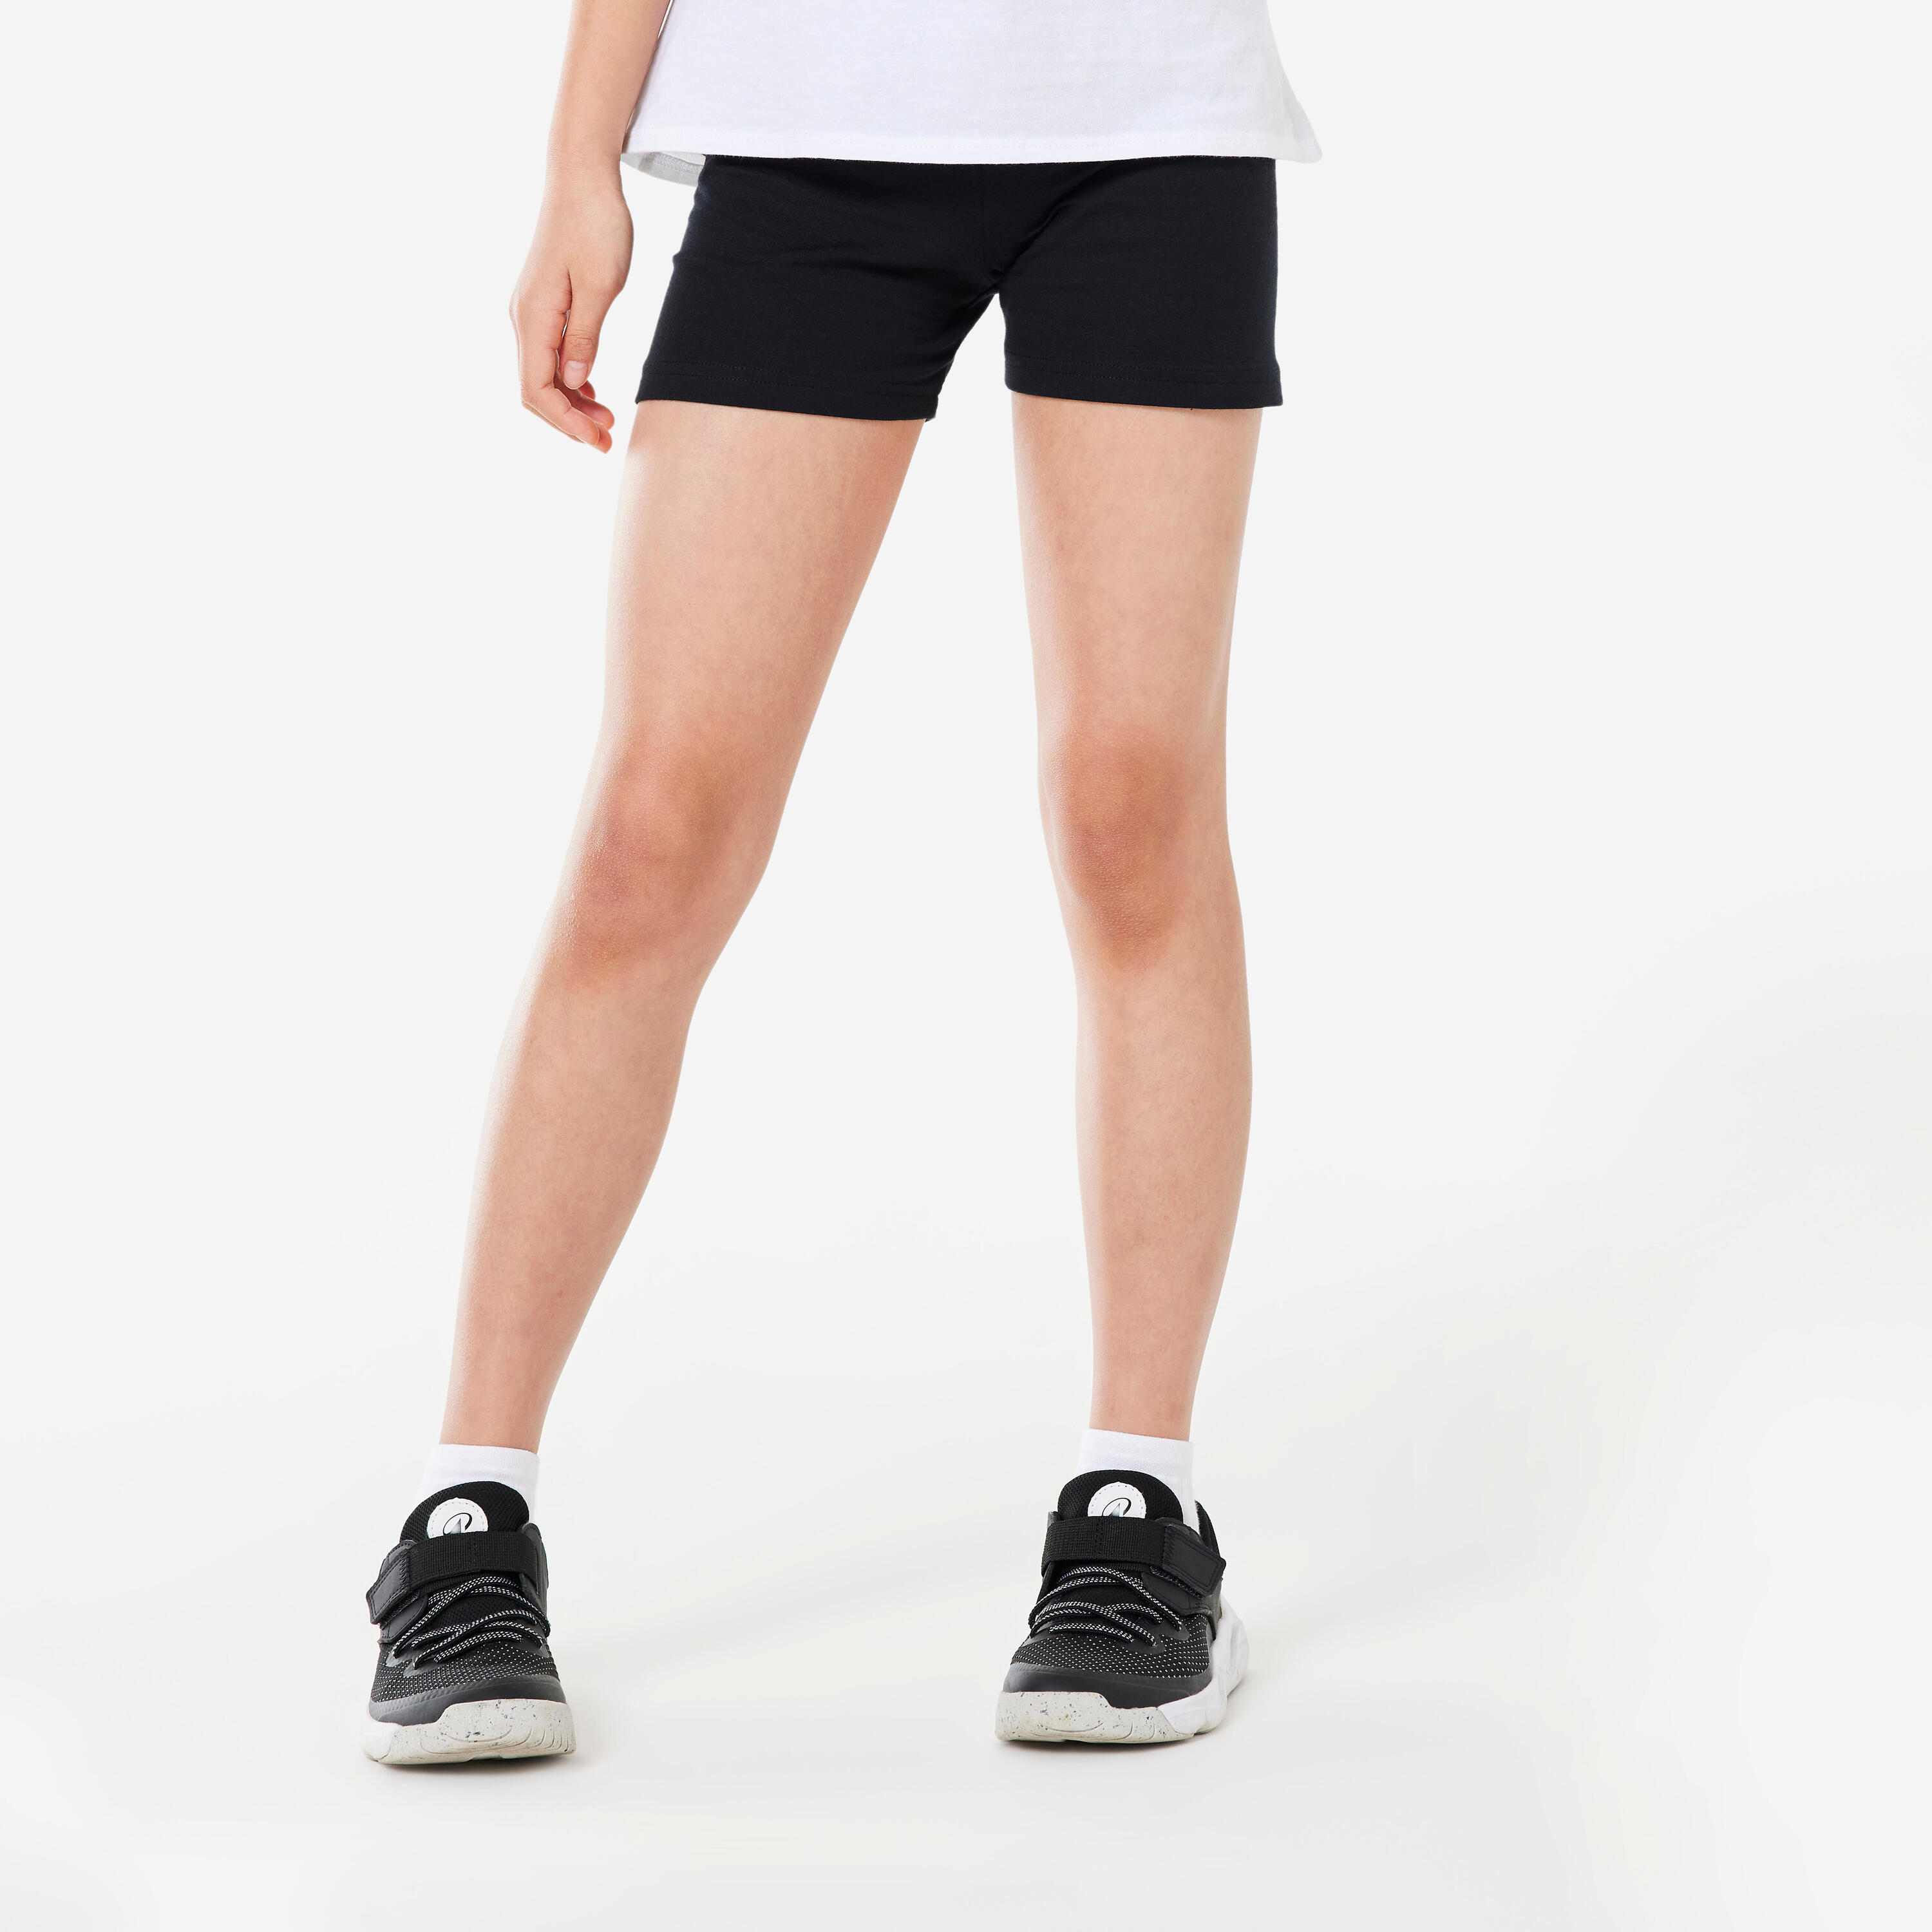 DOMYOS Girls' Basic Cotton Shorts - Black